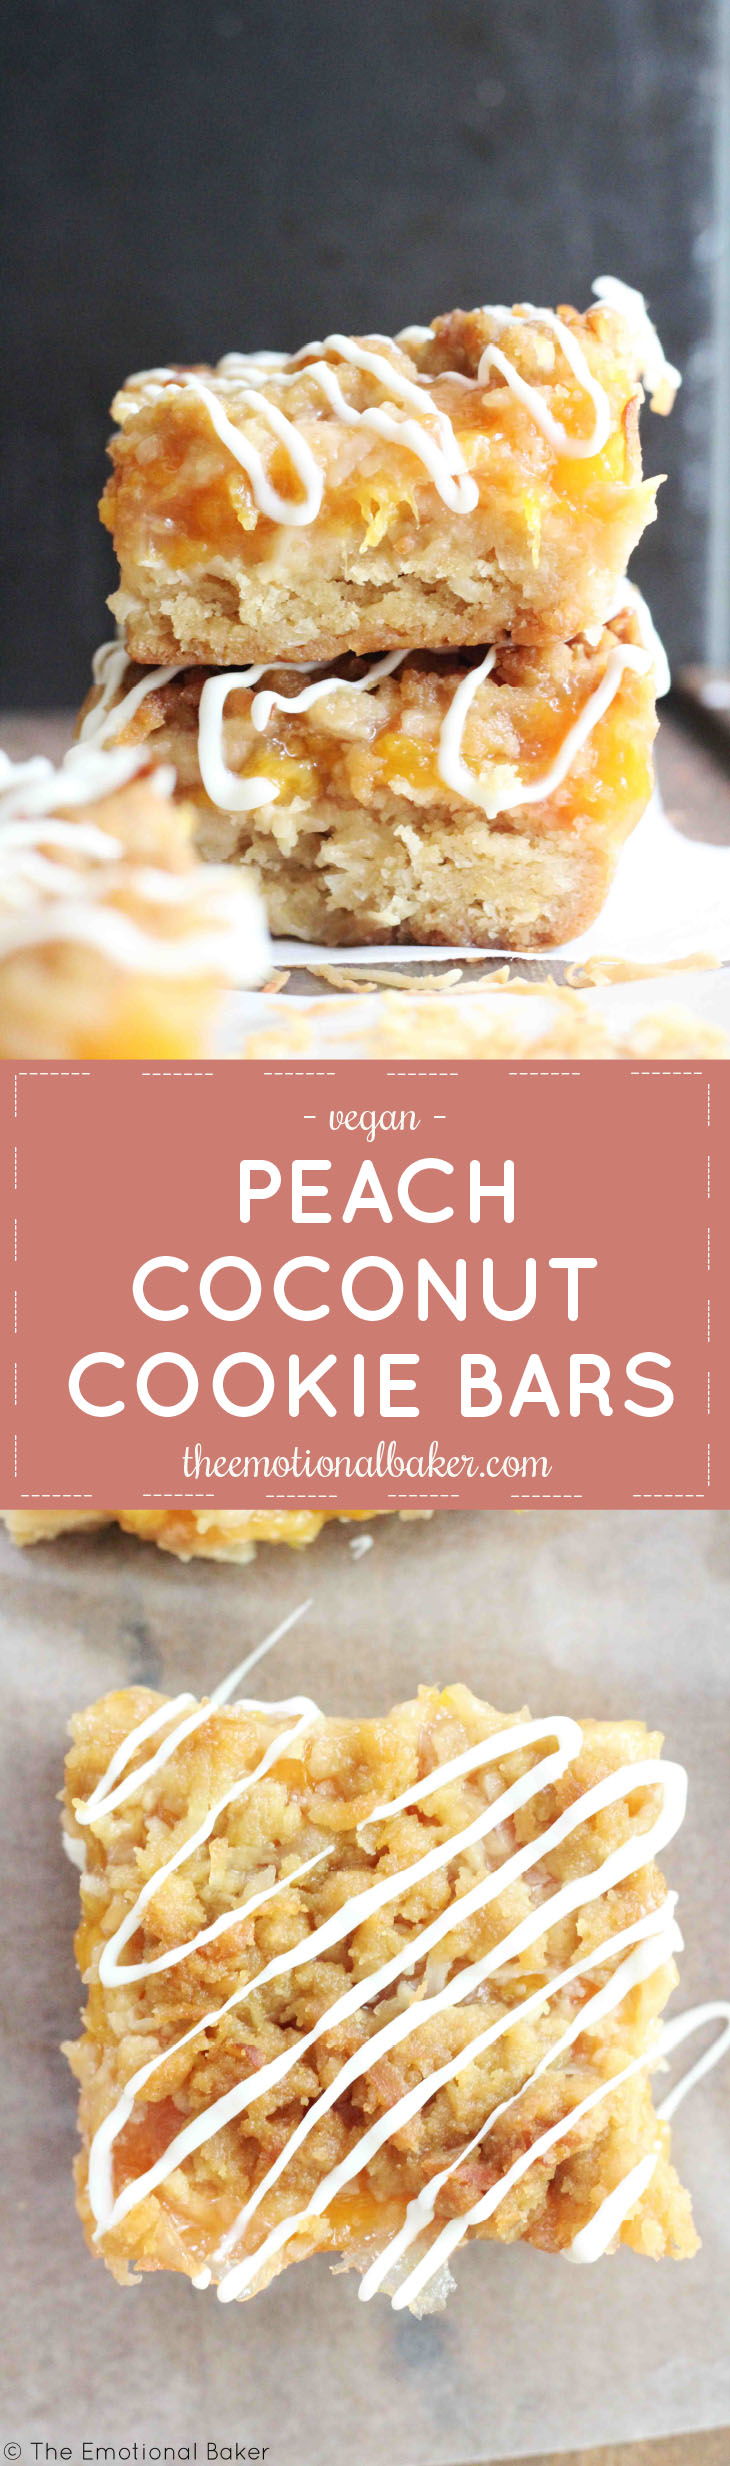 Peach Coconut Cookie Bars